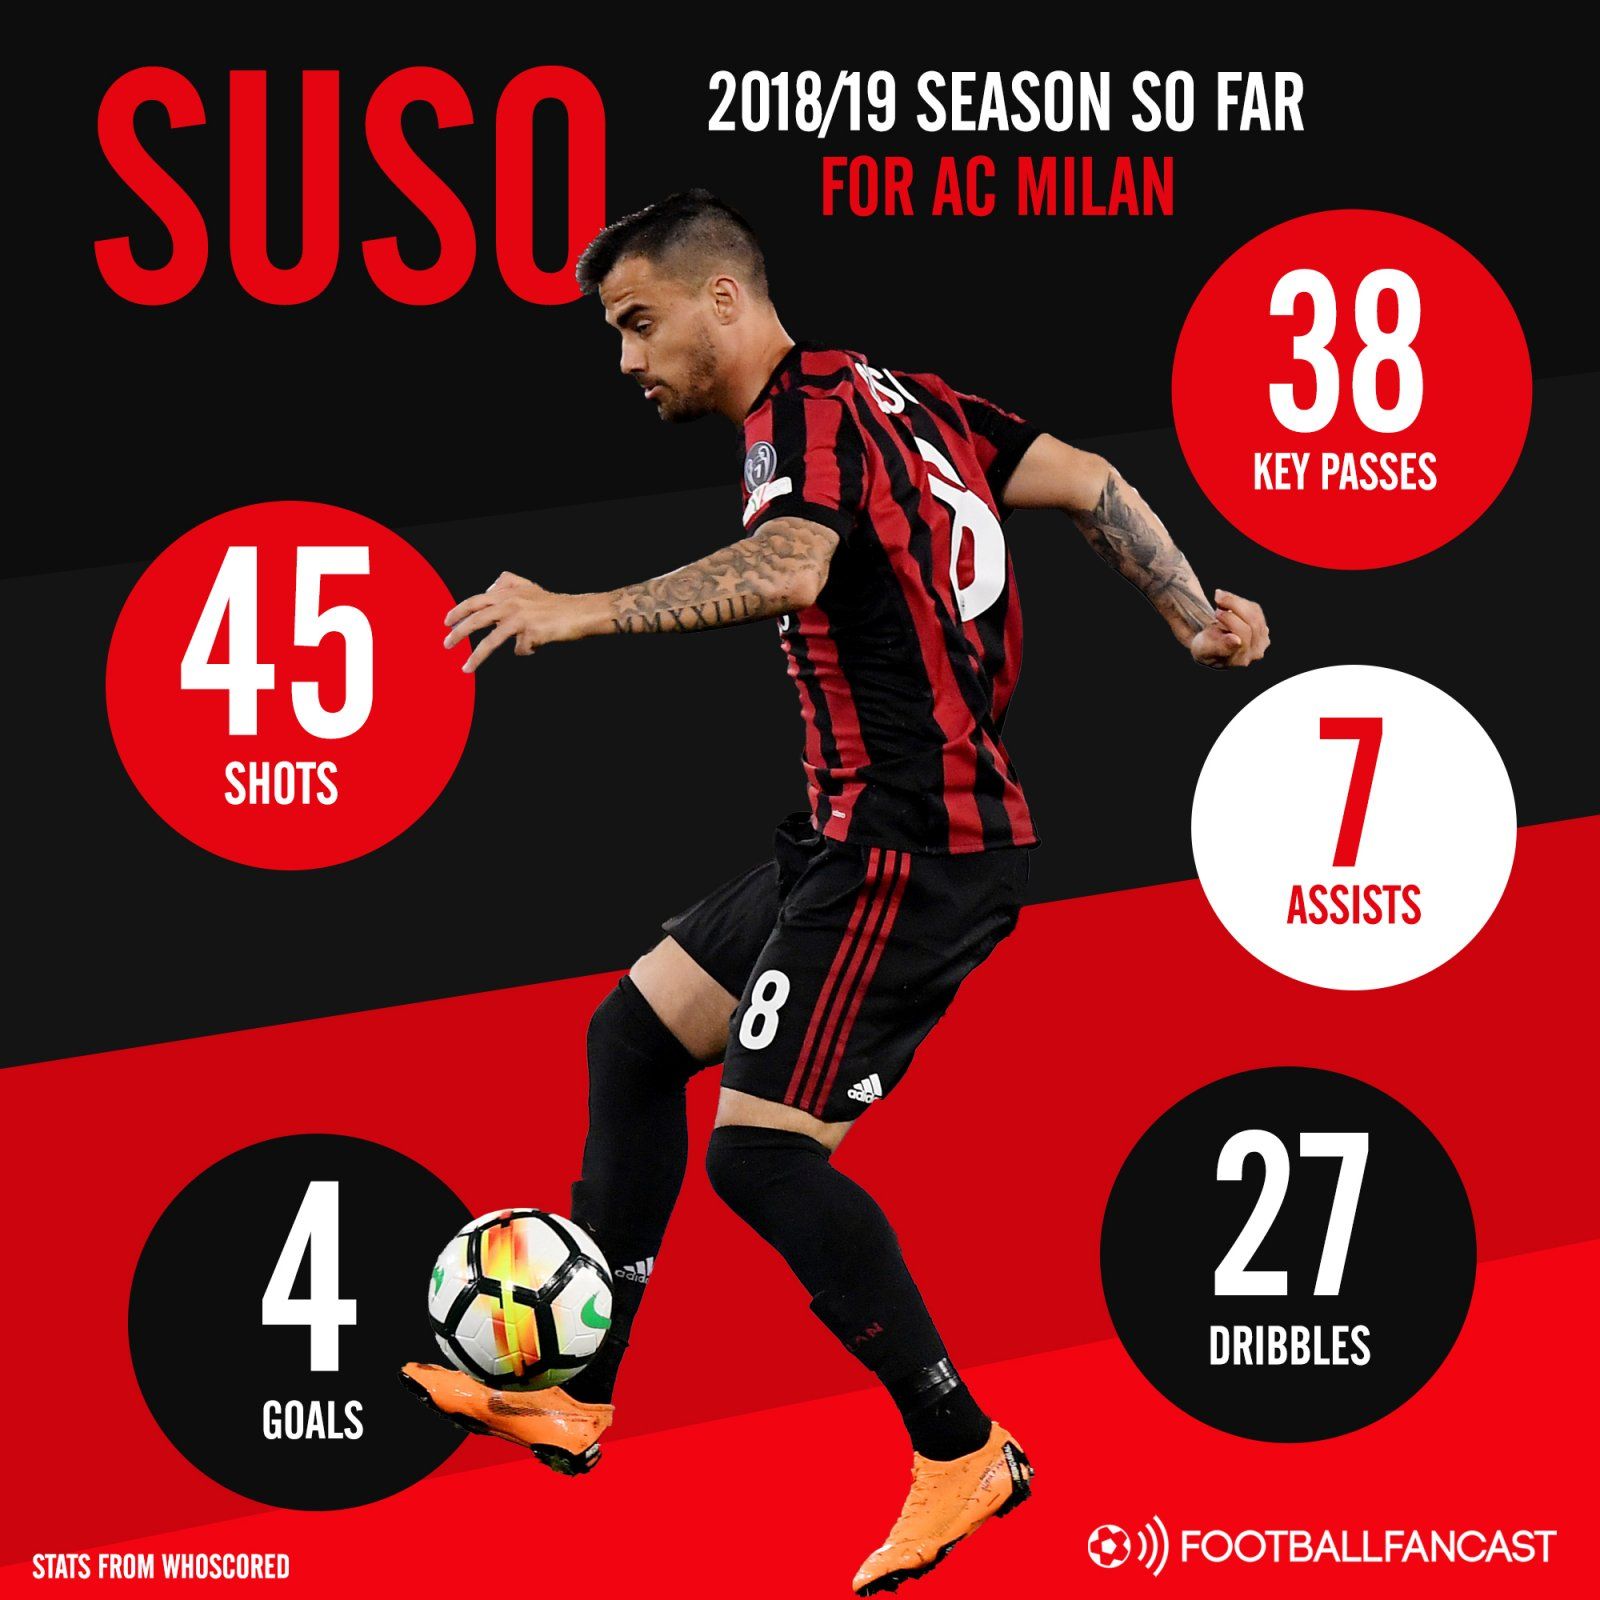 Suso season stats for AC Milan